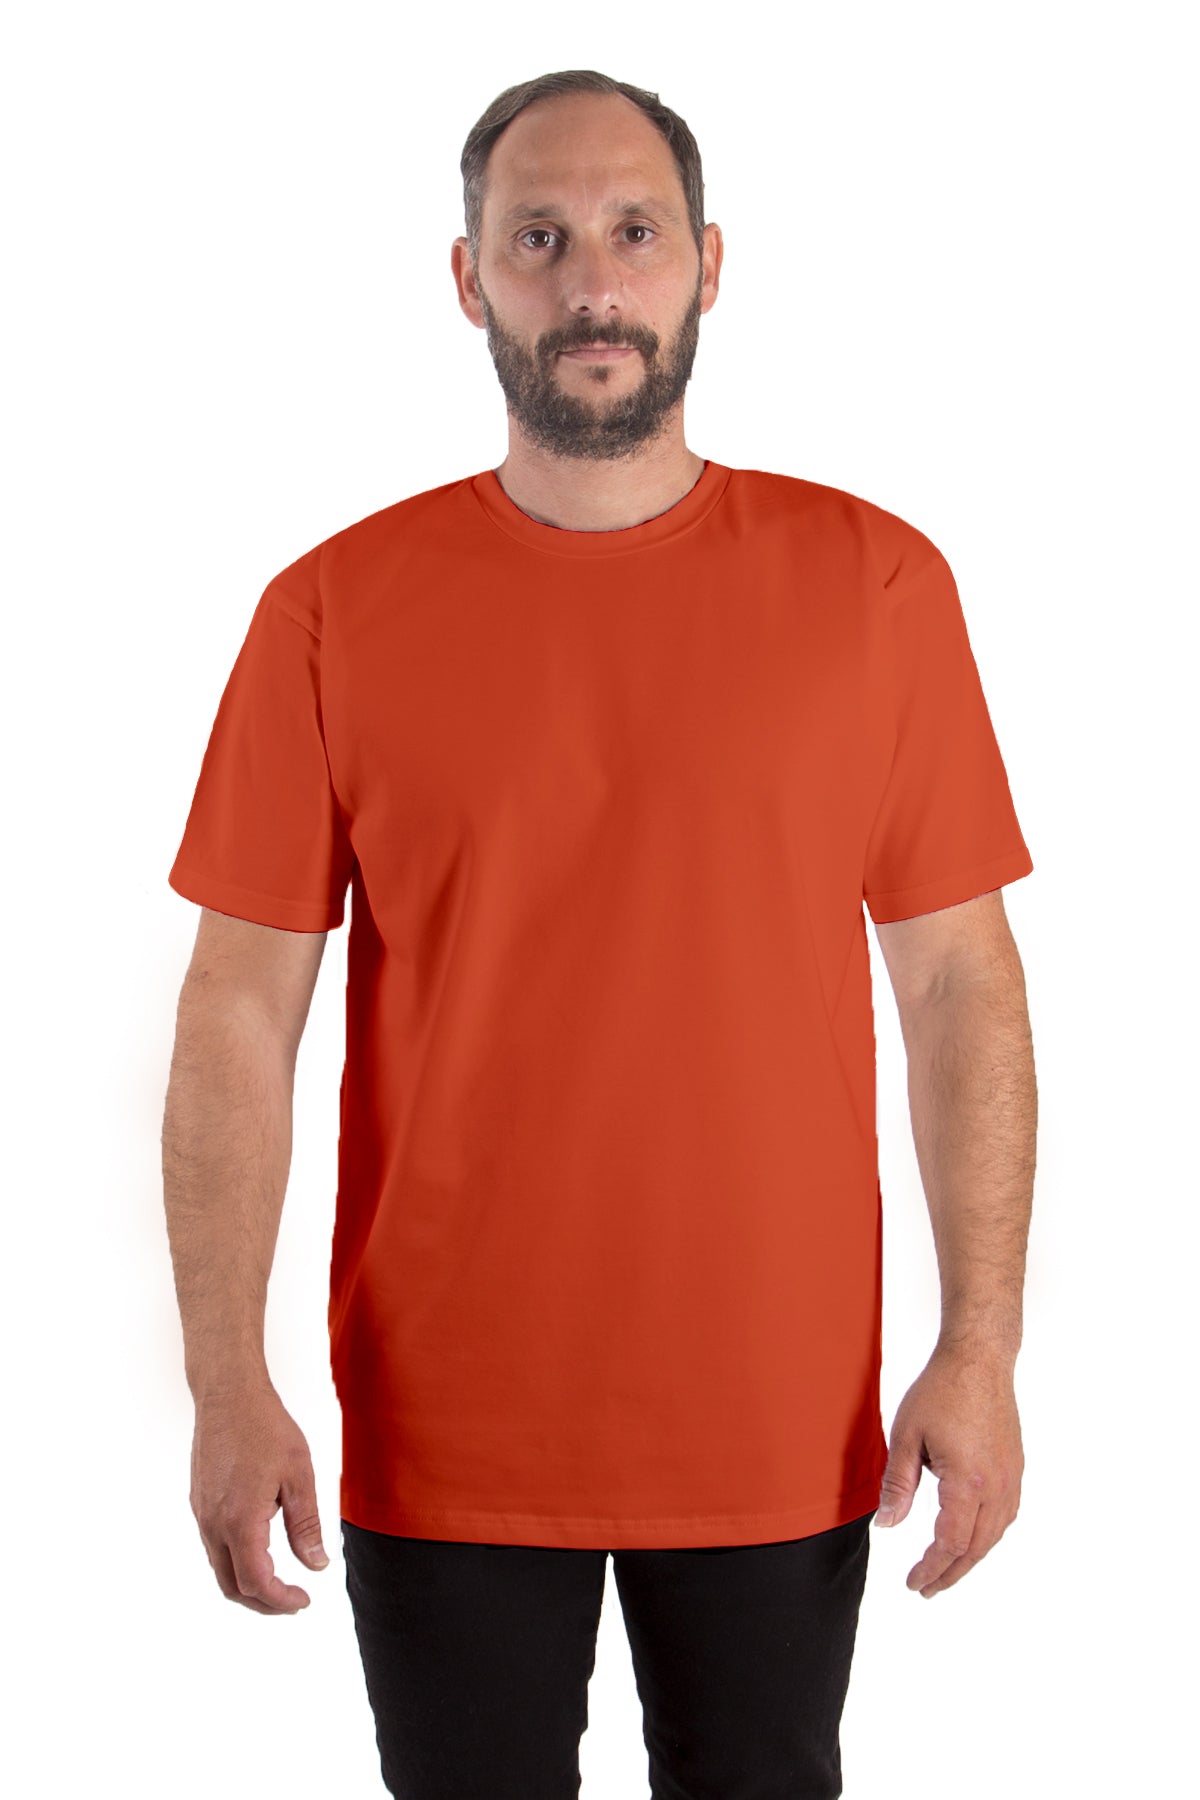 T-Shirt Rundhals (10er-Pack) - rost